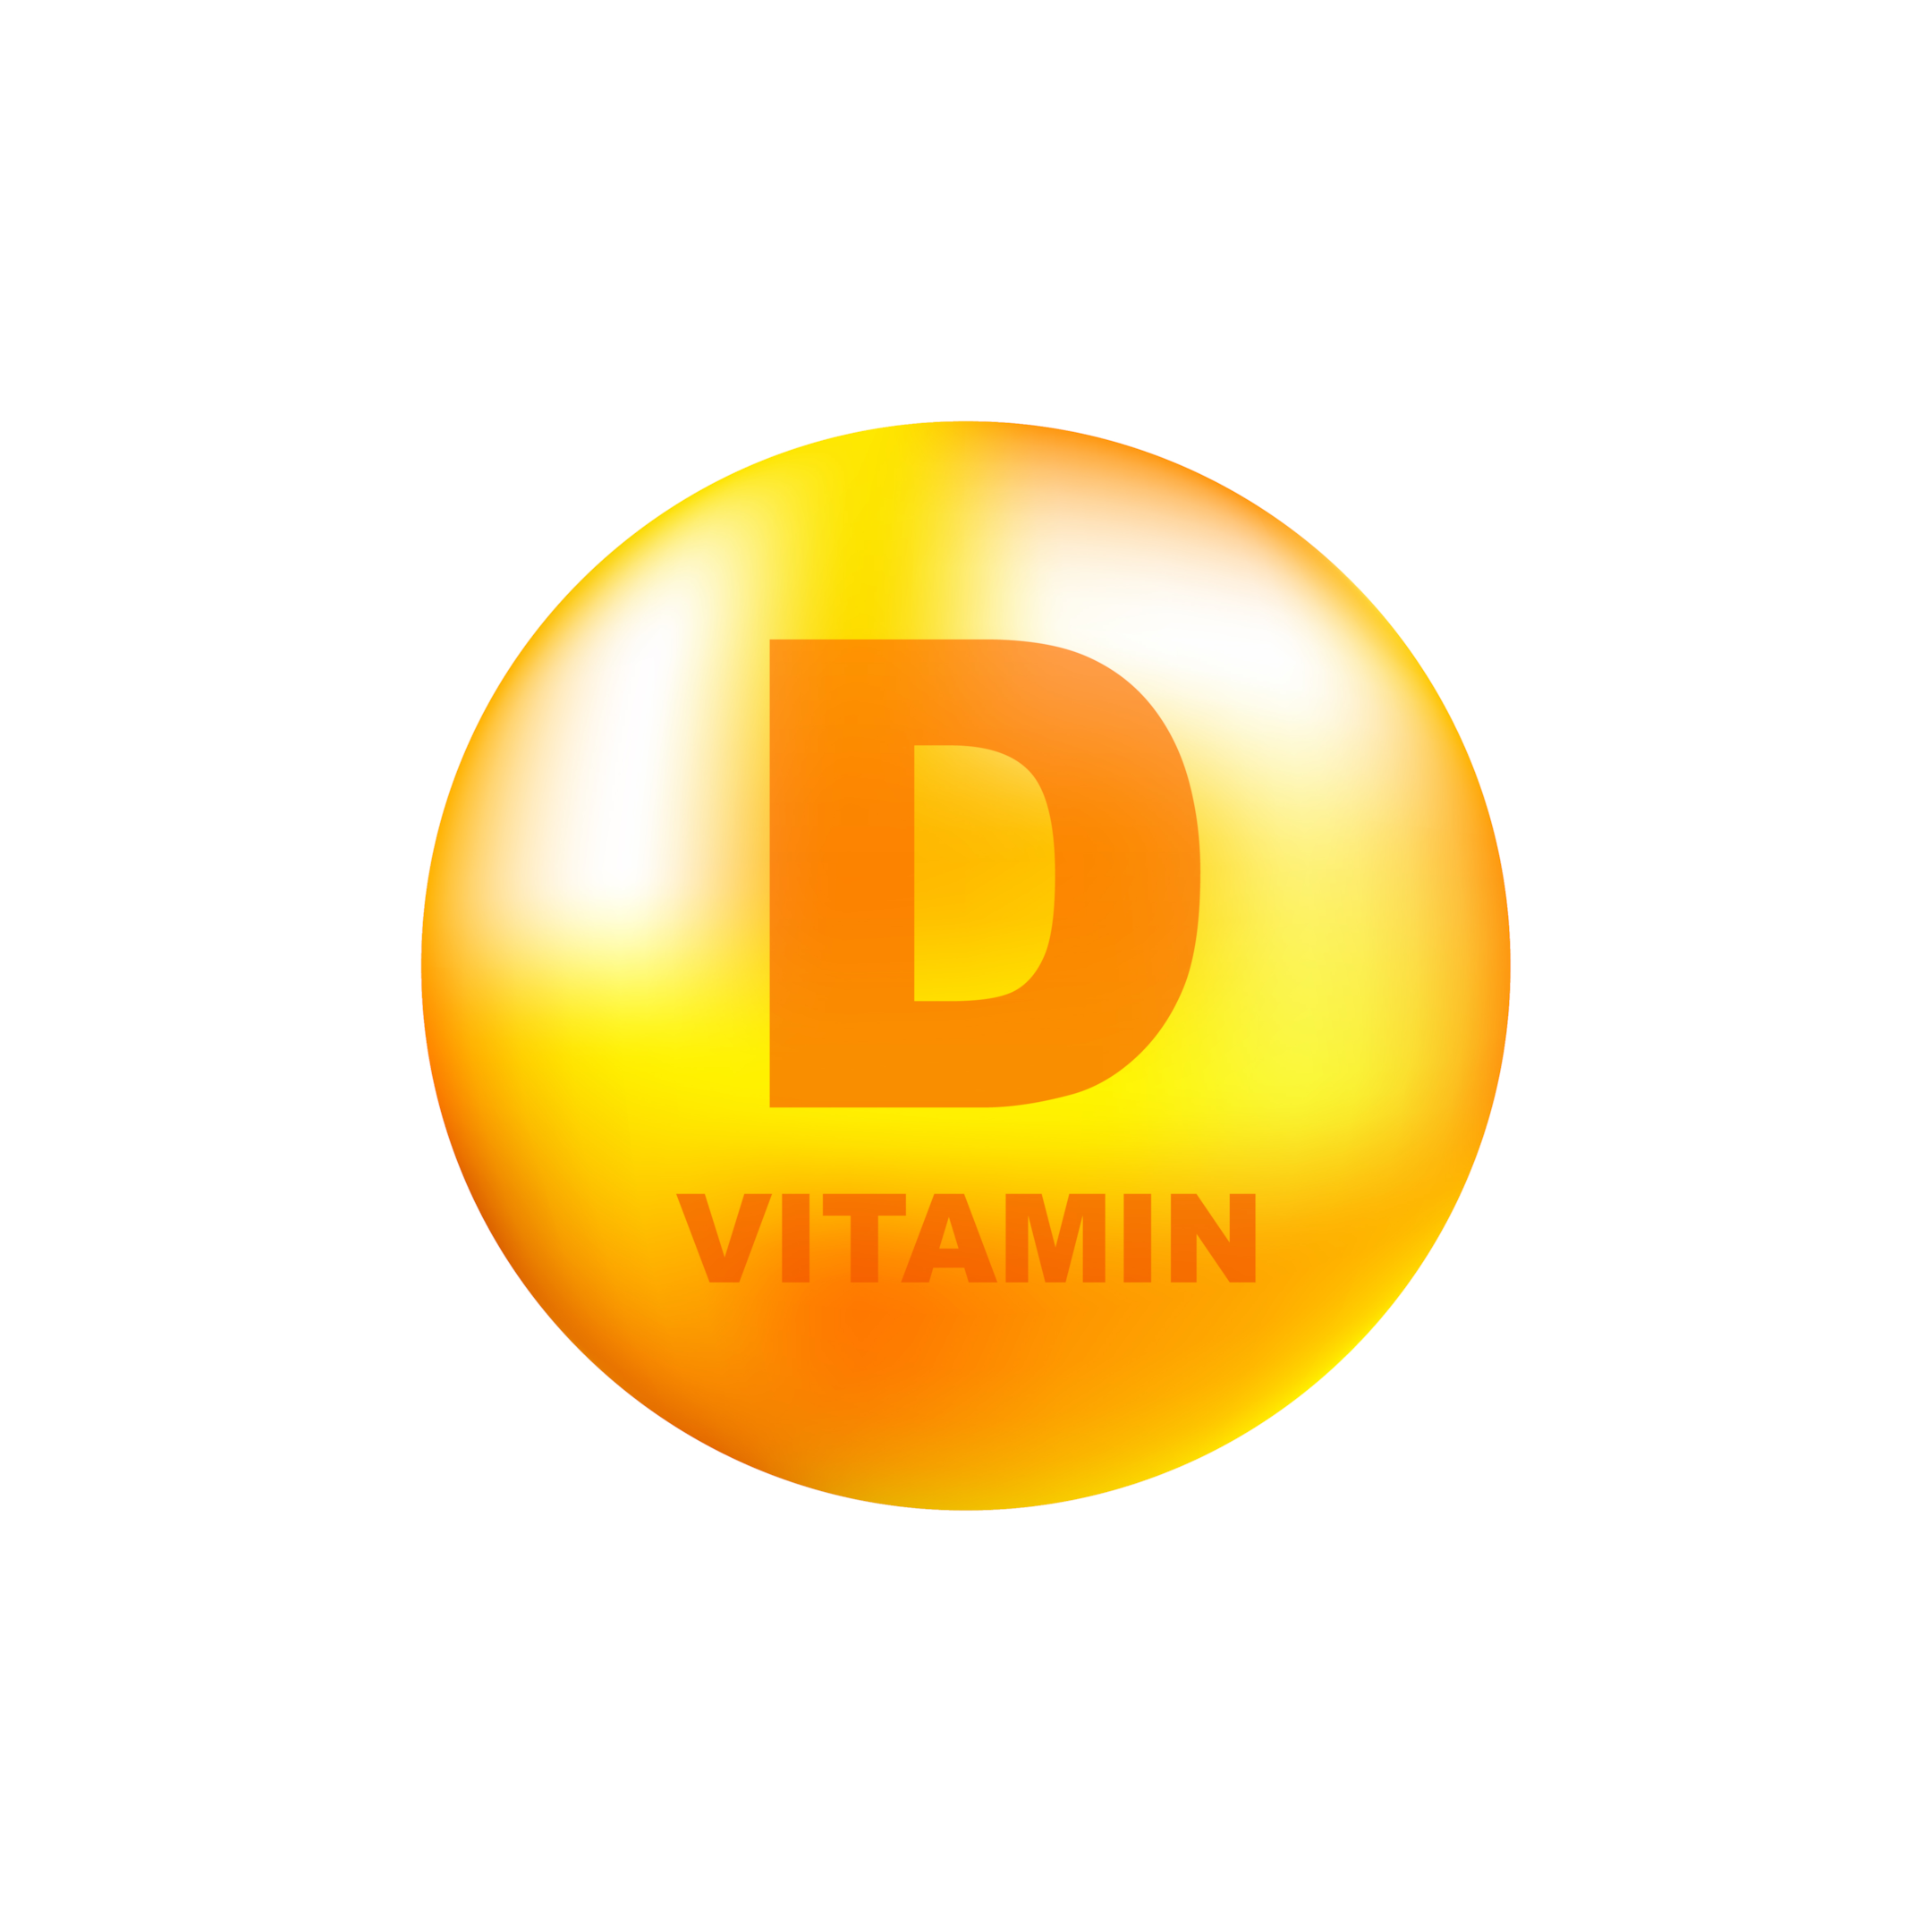 Vitamin D supplementation boost testosterone naturally.